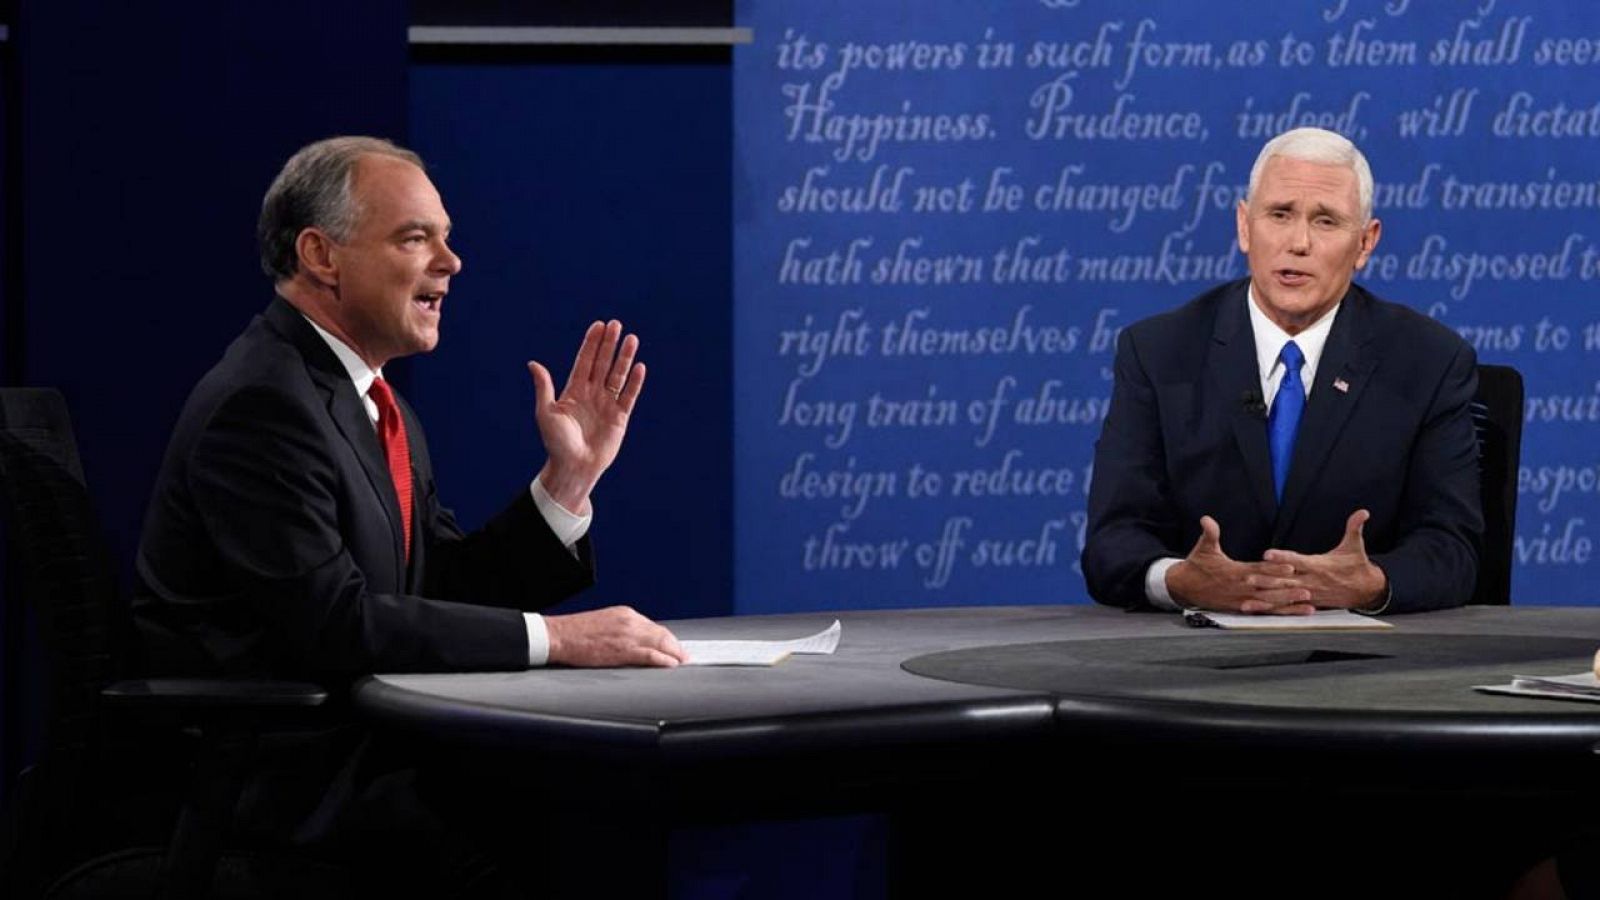 Los candidatos a vicepresidente Tim Kaine y Mike Pence, durante el debate